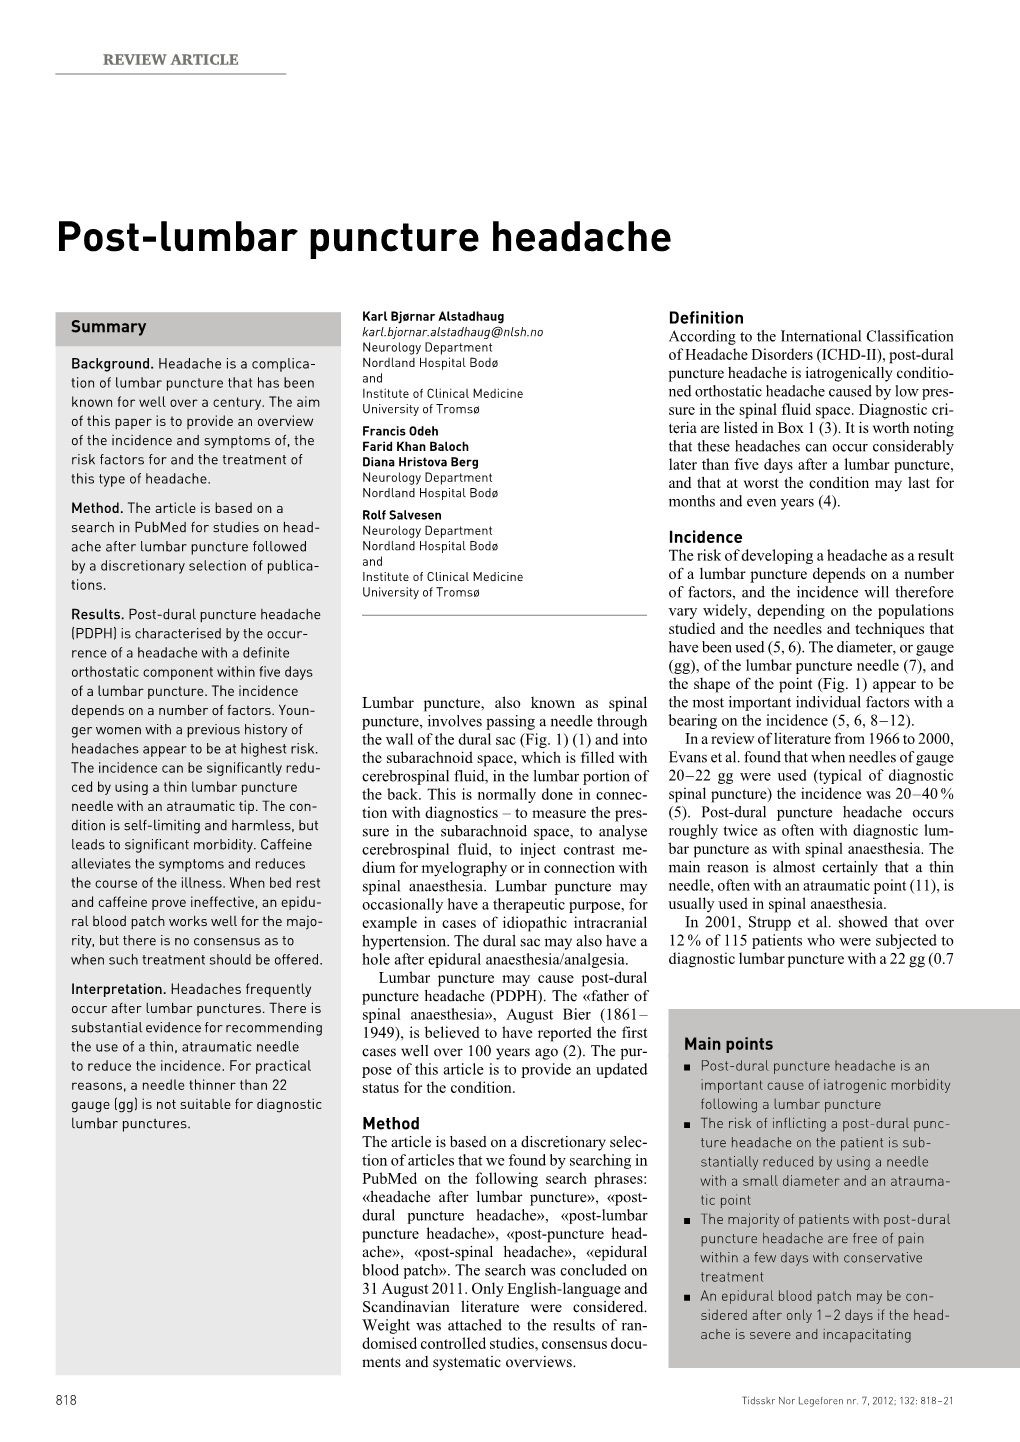 Post-Lumbar Puncture Headache 818 – 21